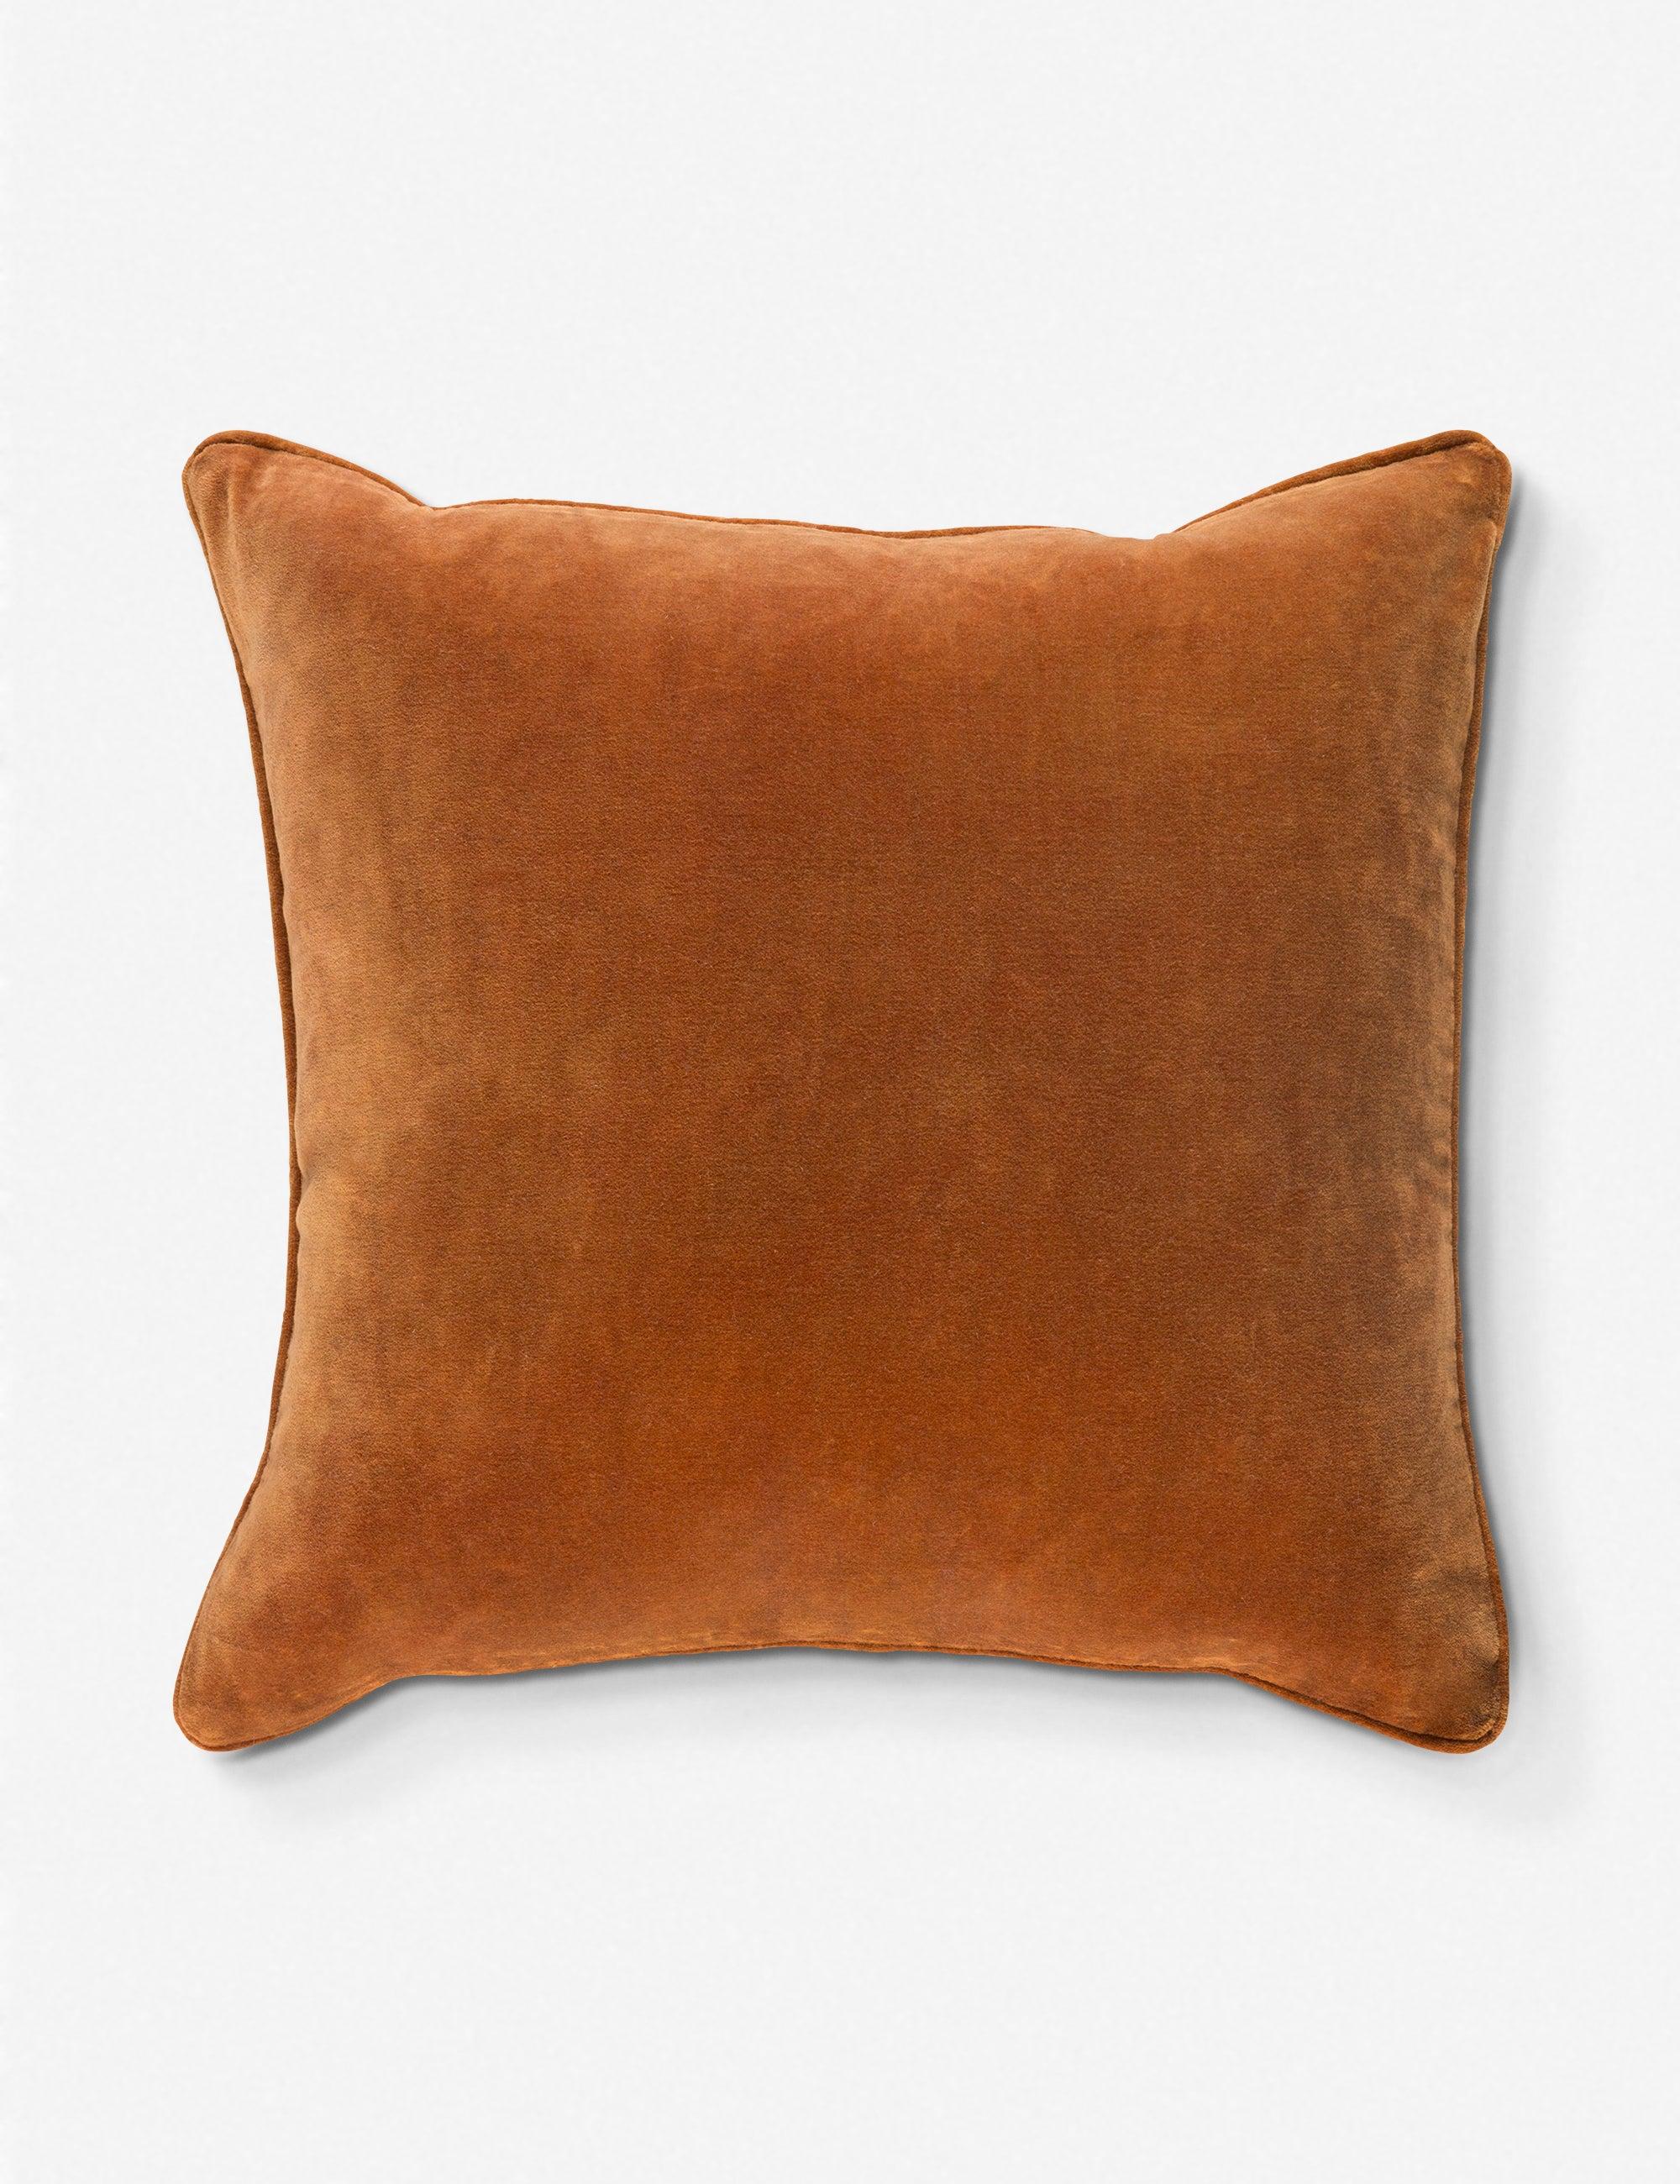 Embroidered Velvet Square Pillow Set - Ideal Mother's Gift